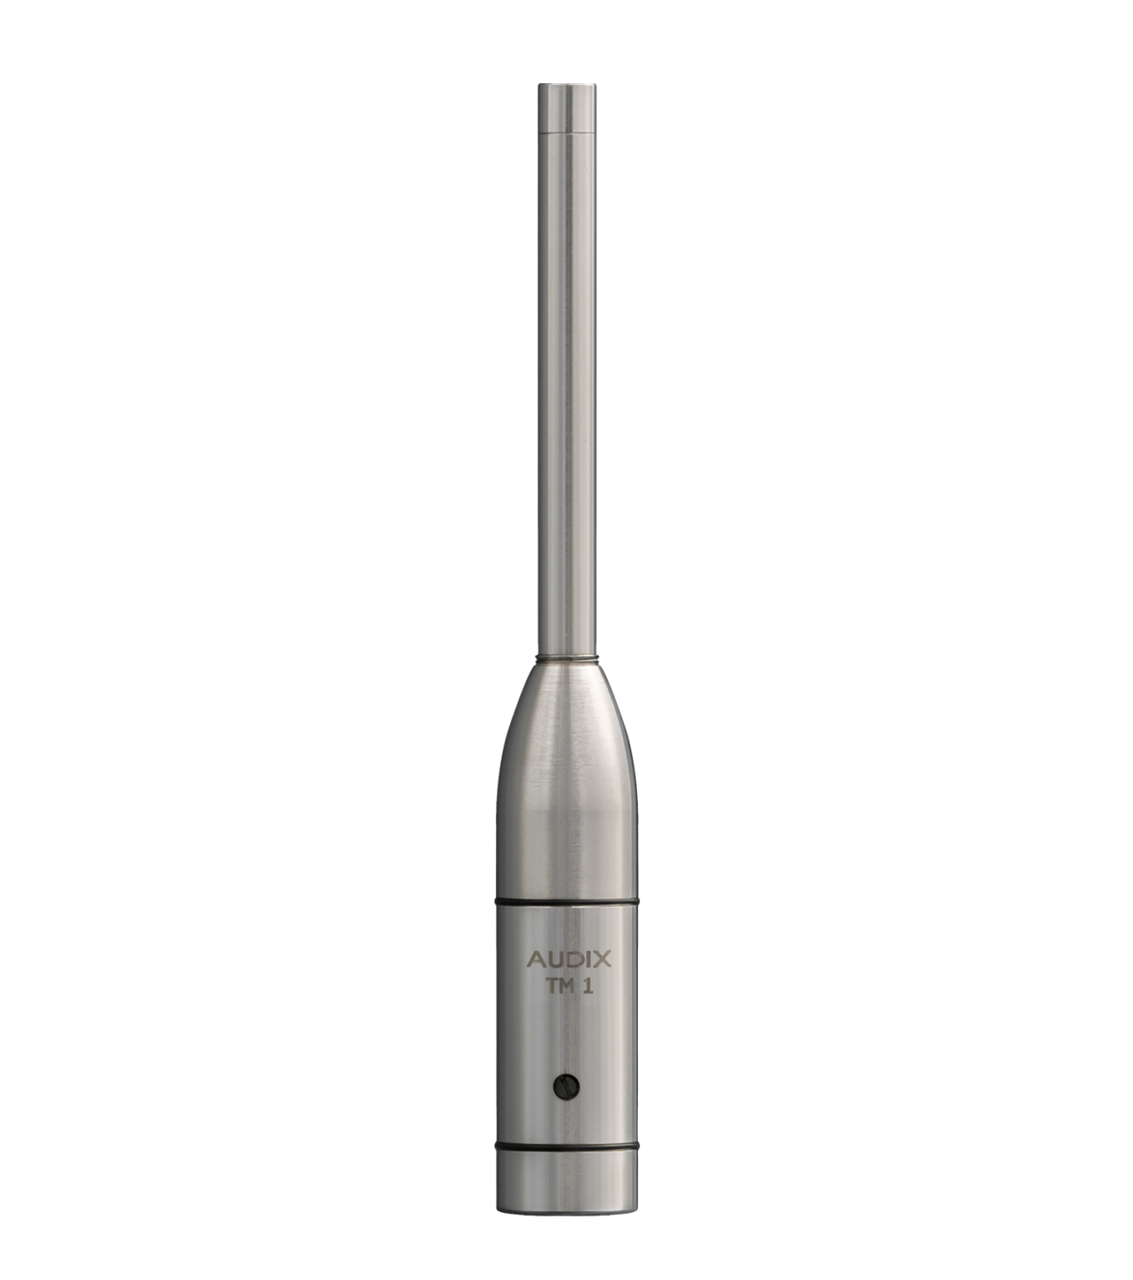 Audix TM1PLUS Omni-Directional Test & Measurement Microphone Kit